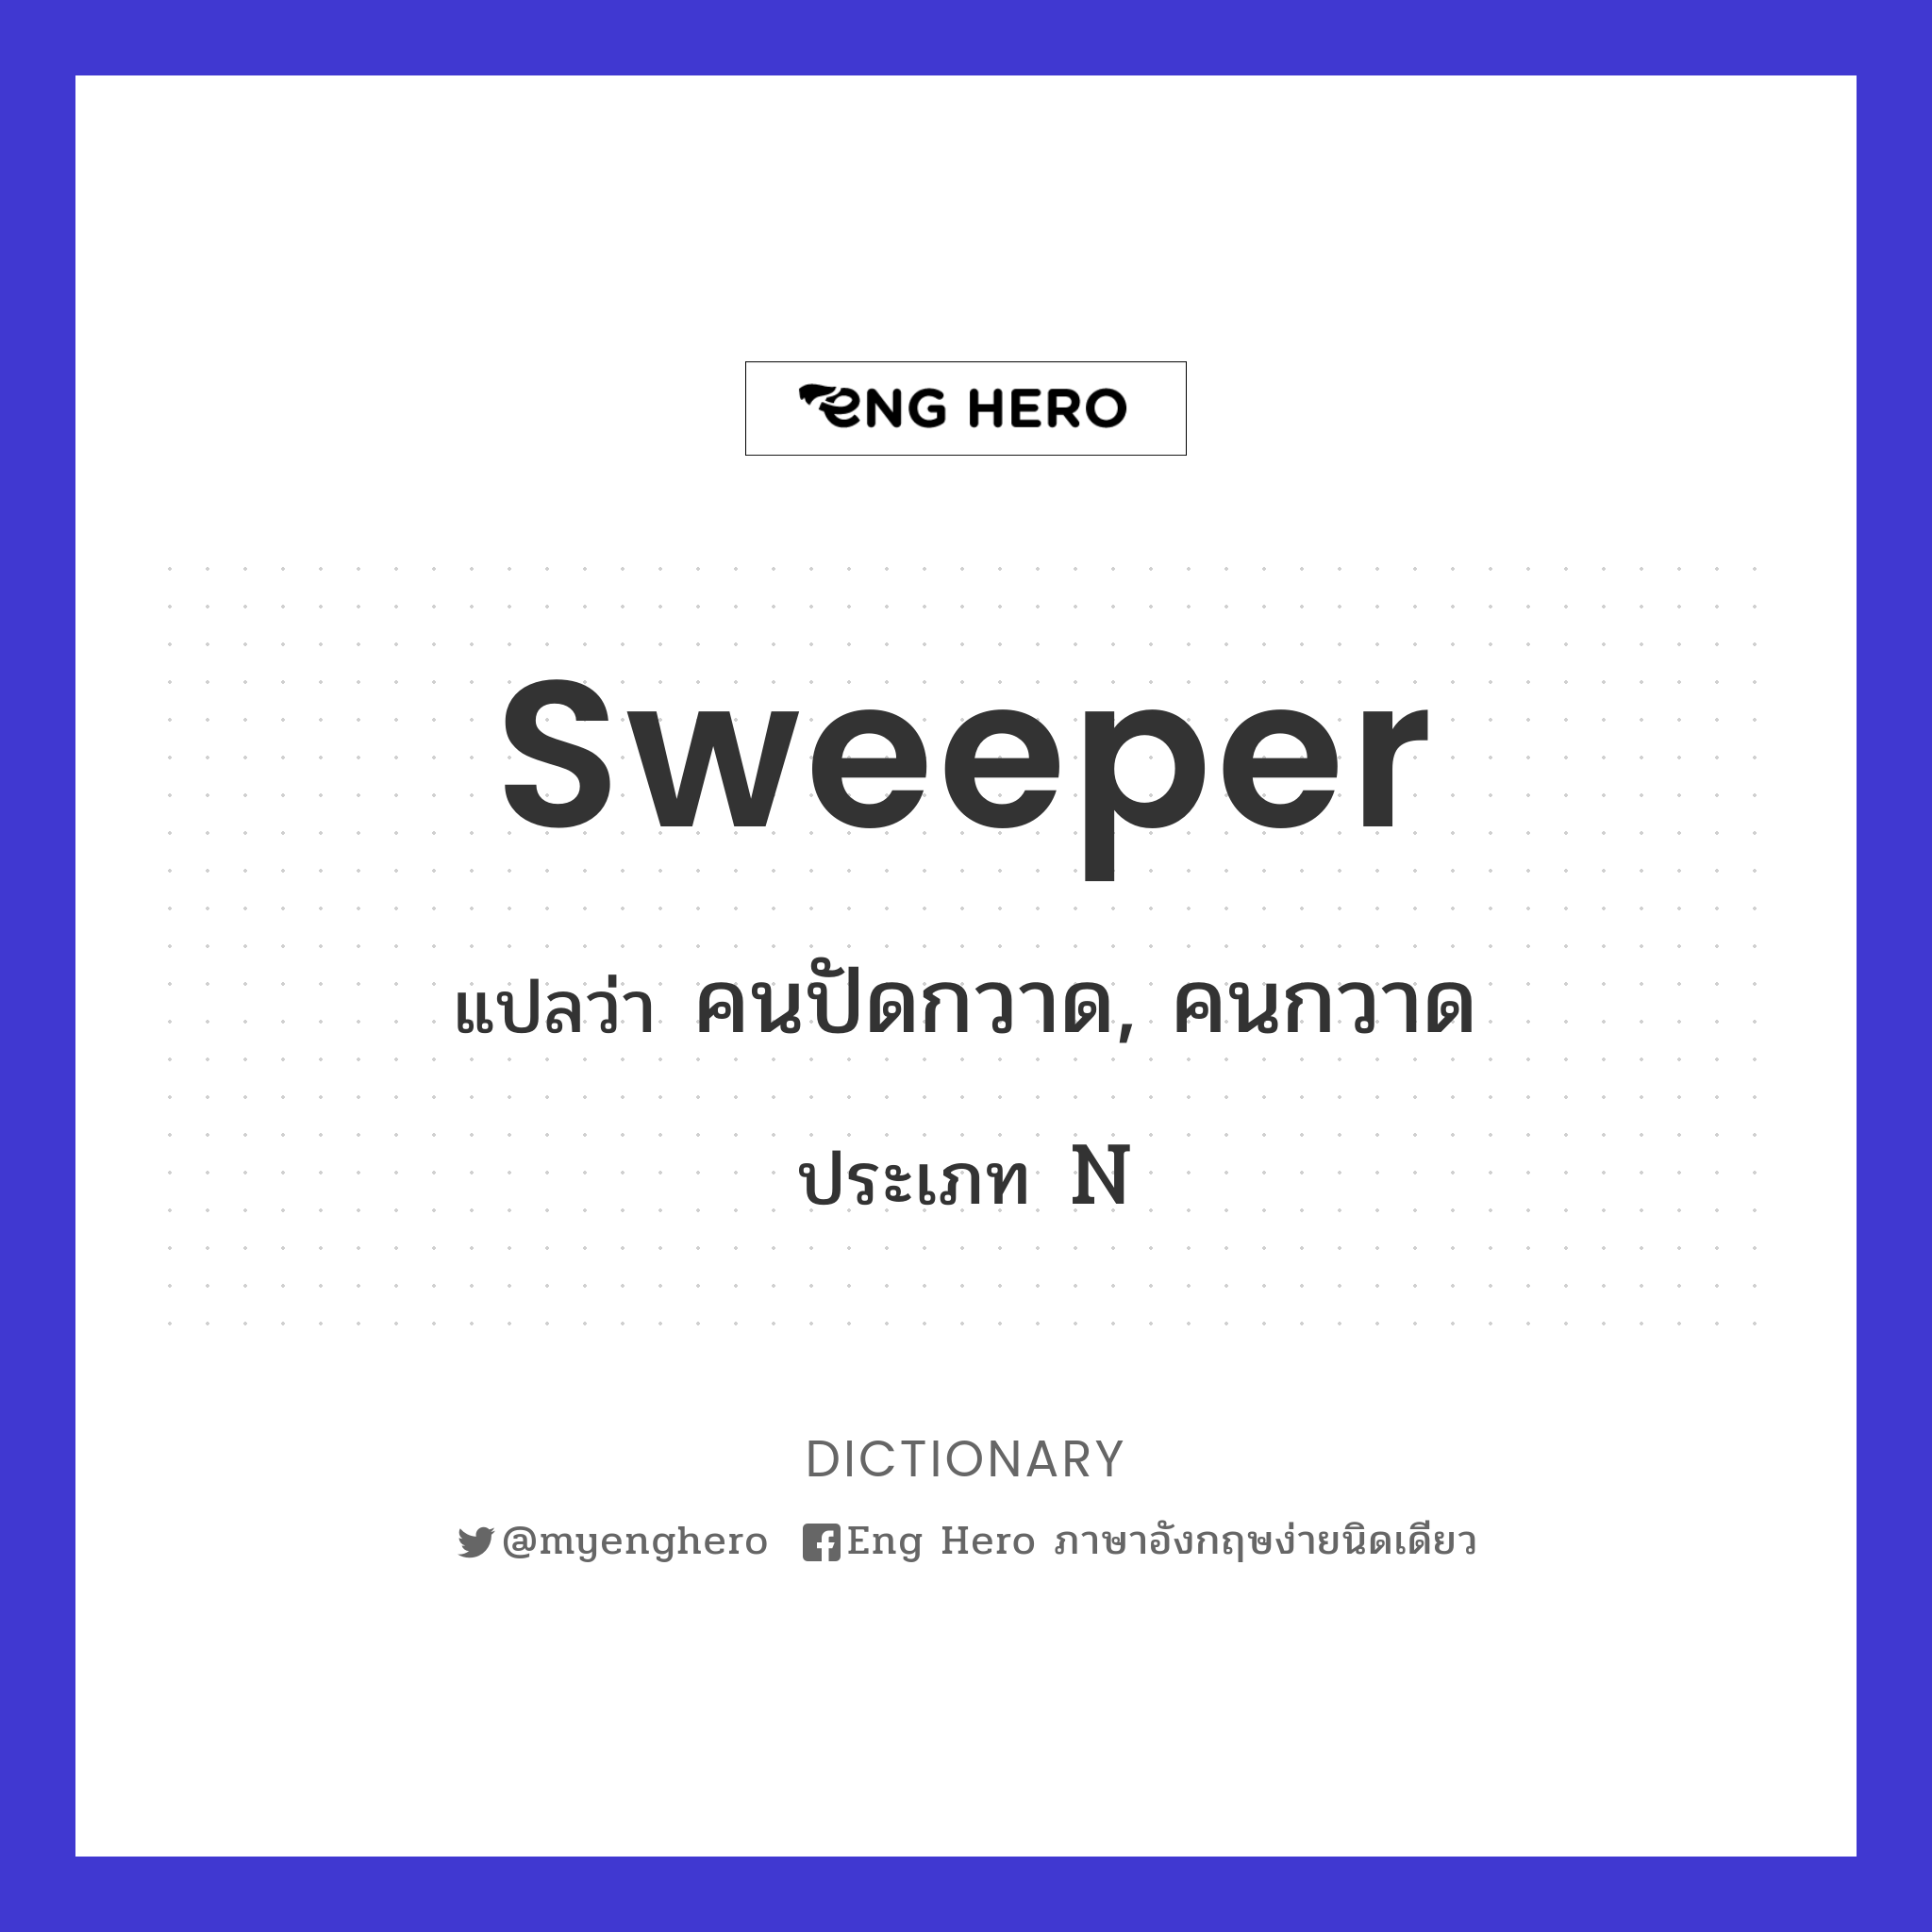 sweeper